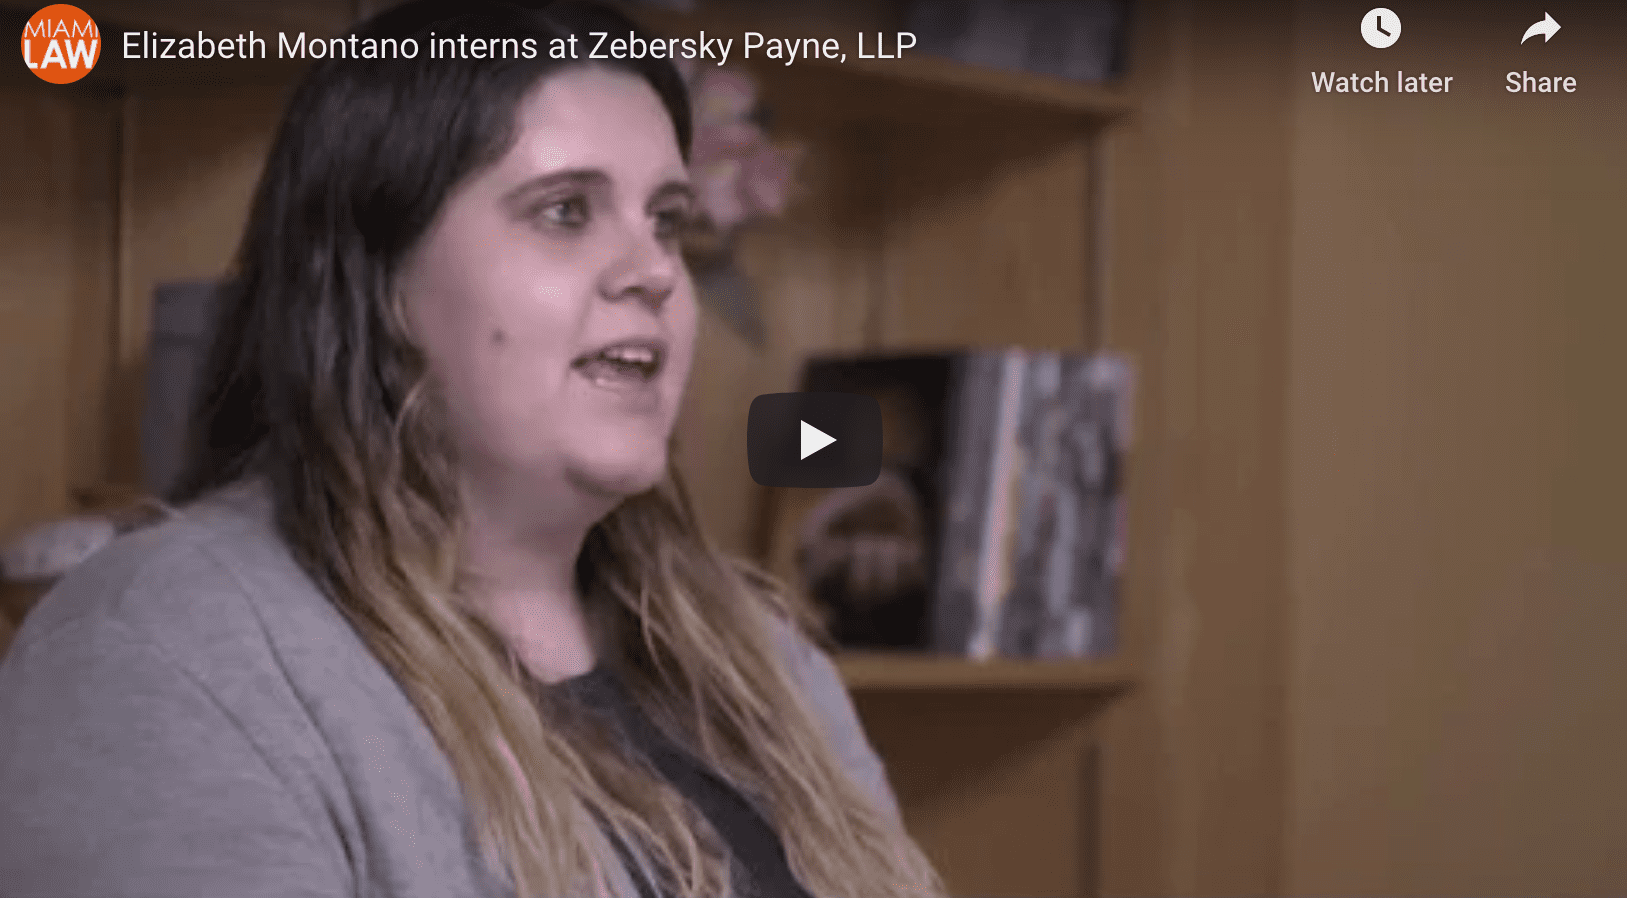 Elizabeth Montano talks about her internship at Zebersky Payne, LLP